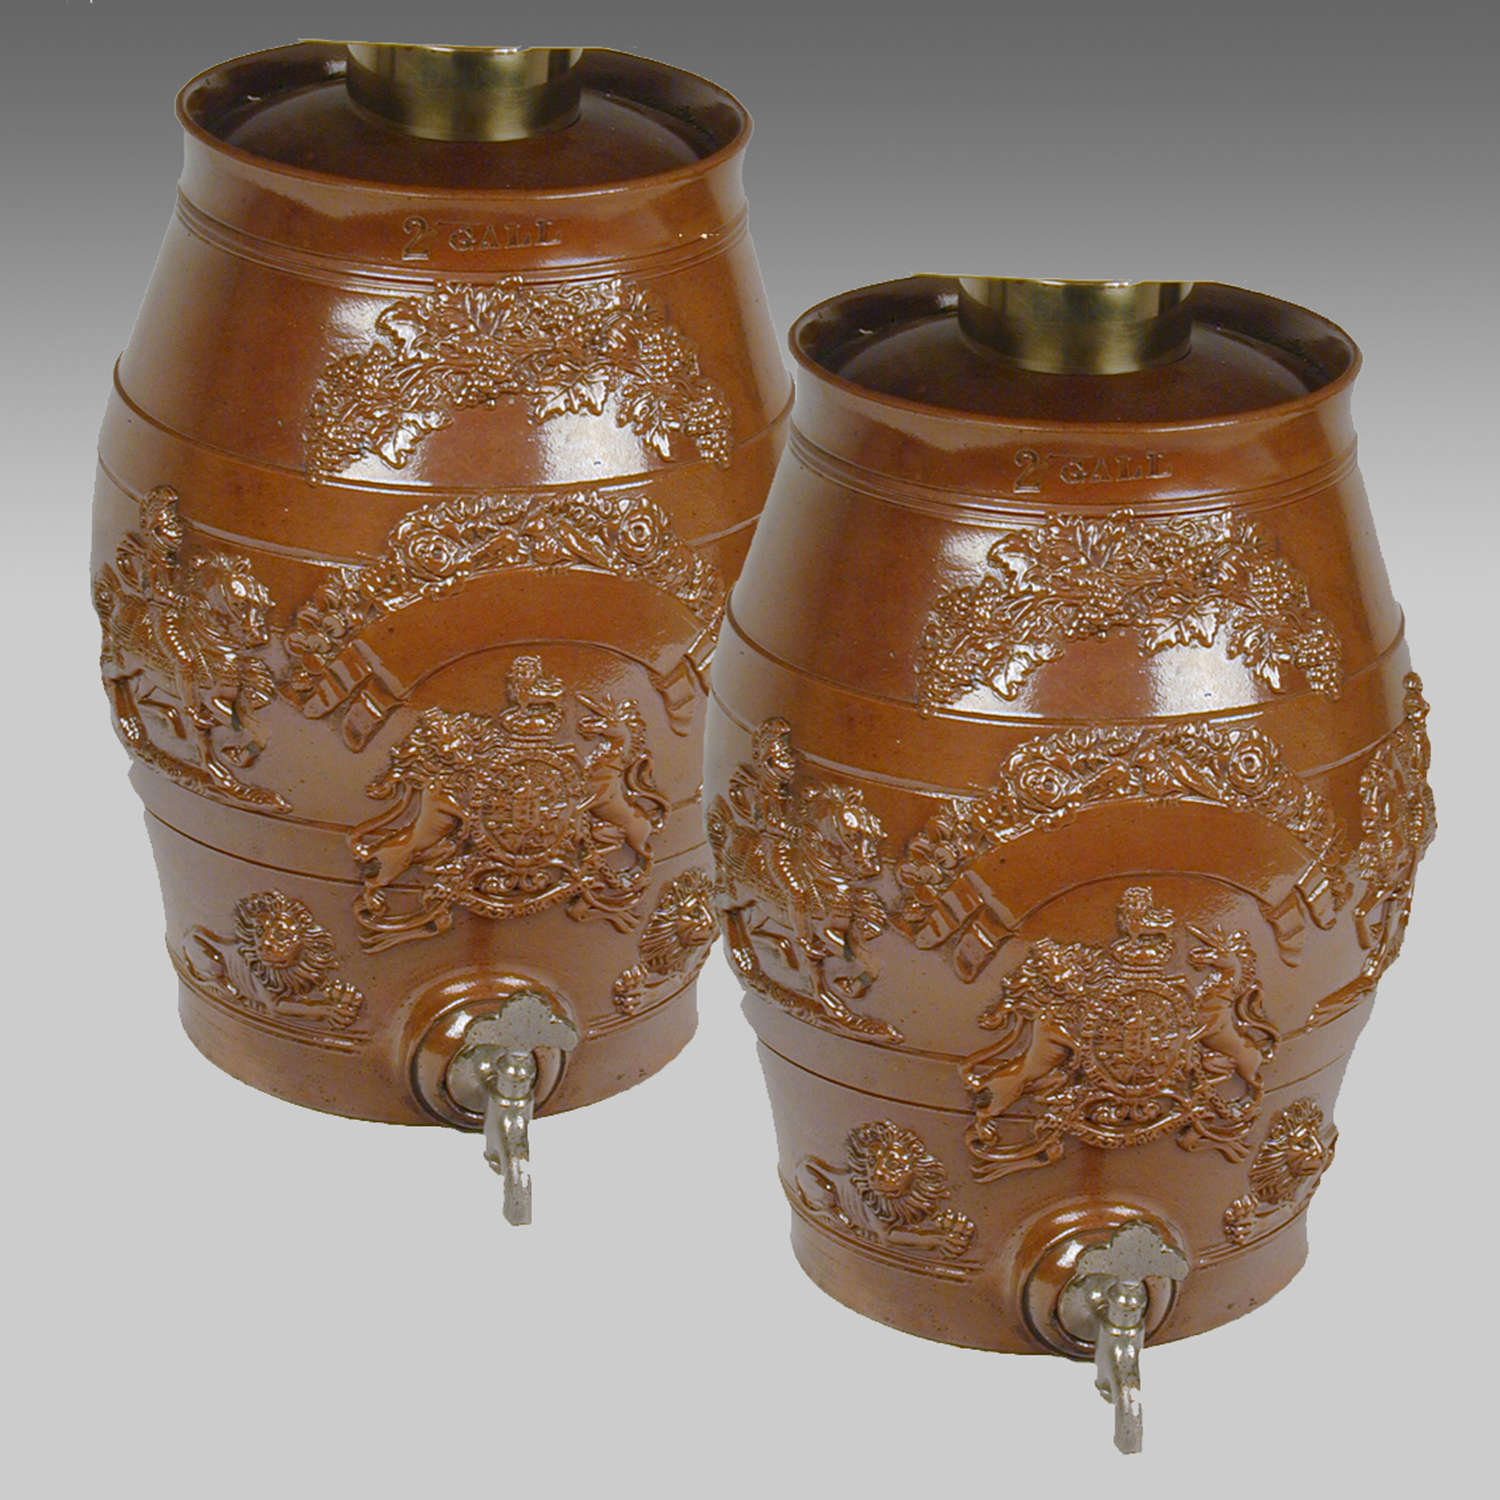 Pr. Derbyshire Brampton pottery salt-glazed stoneware spirit barrels